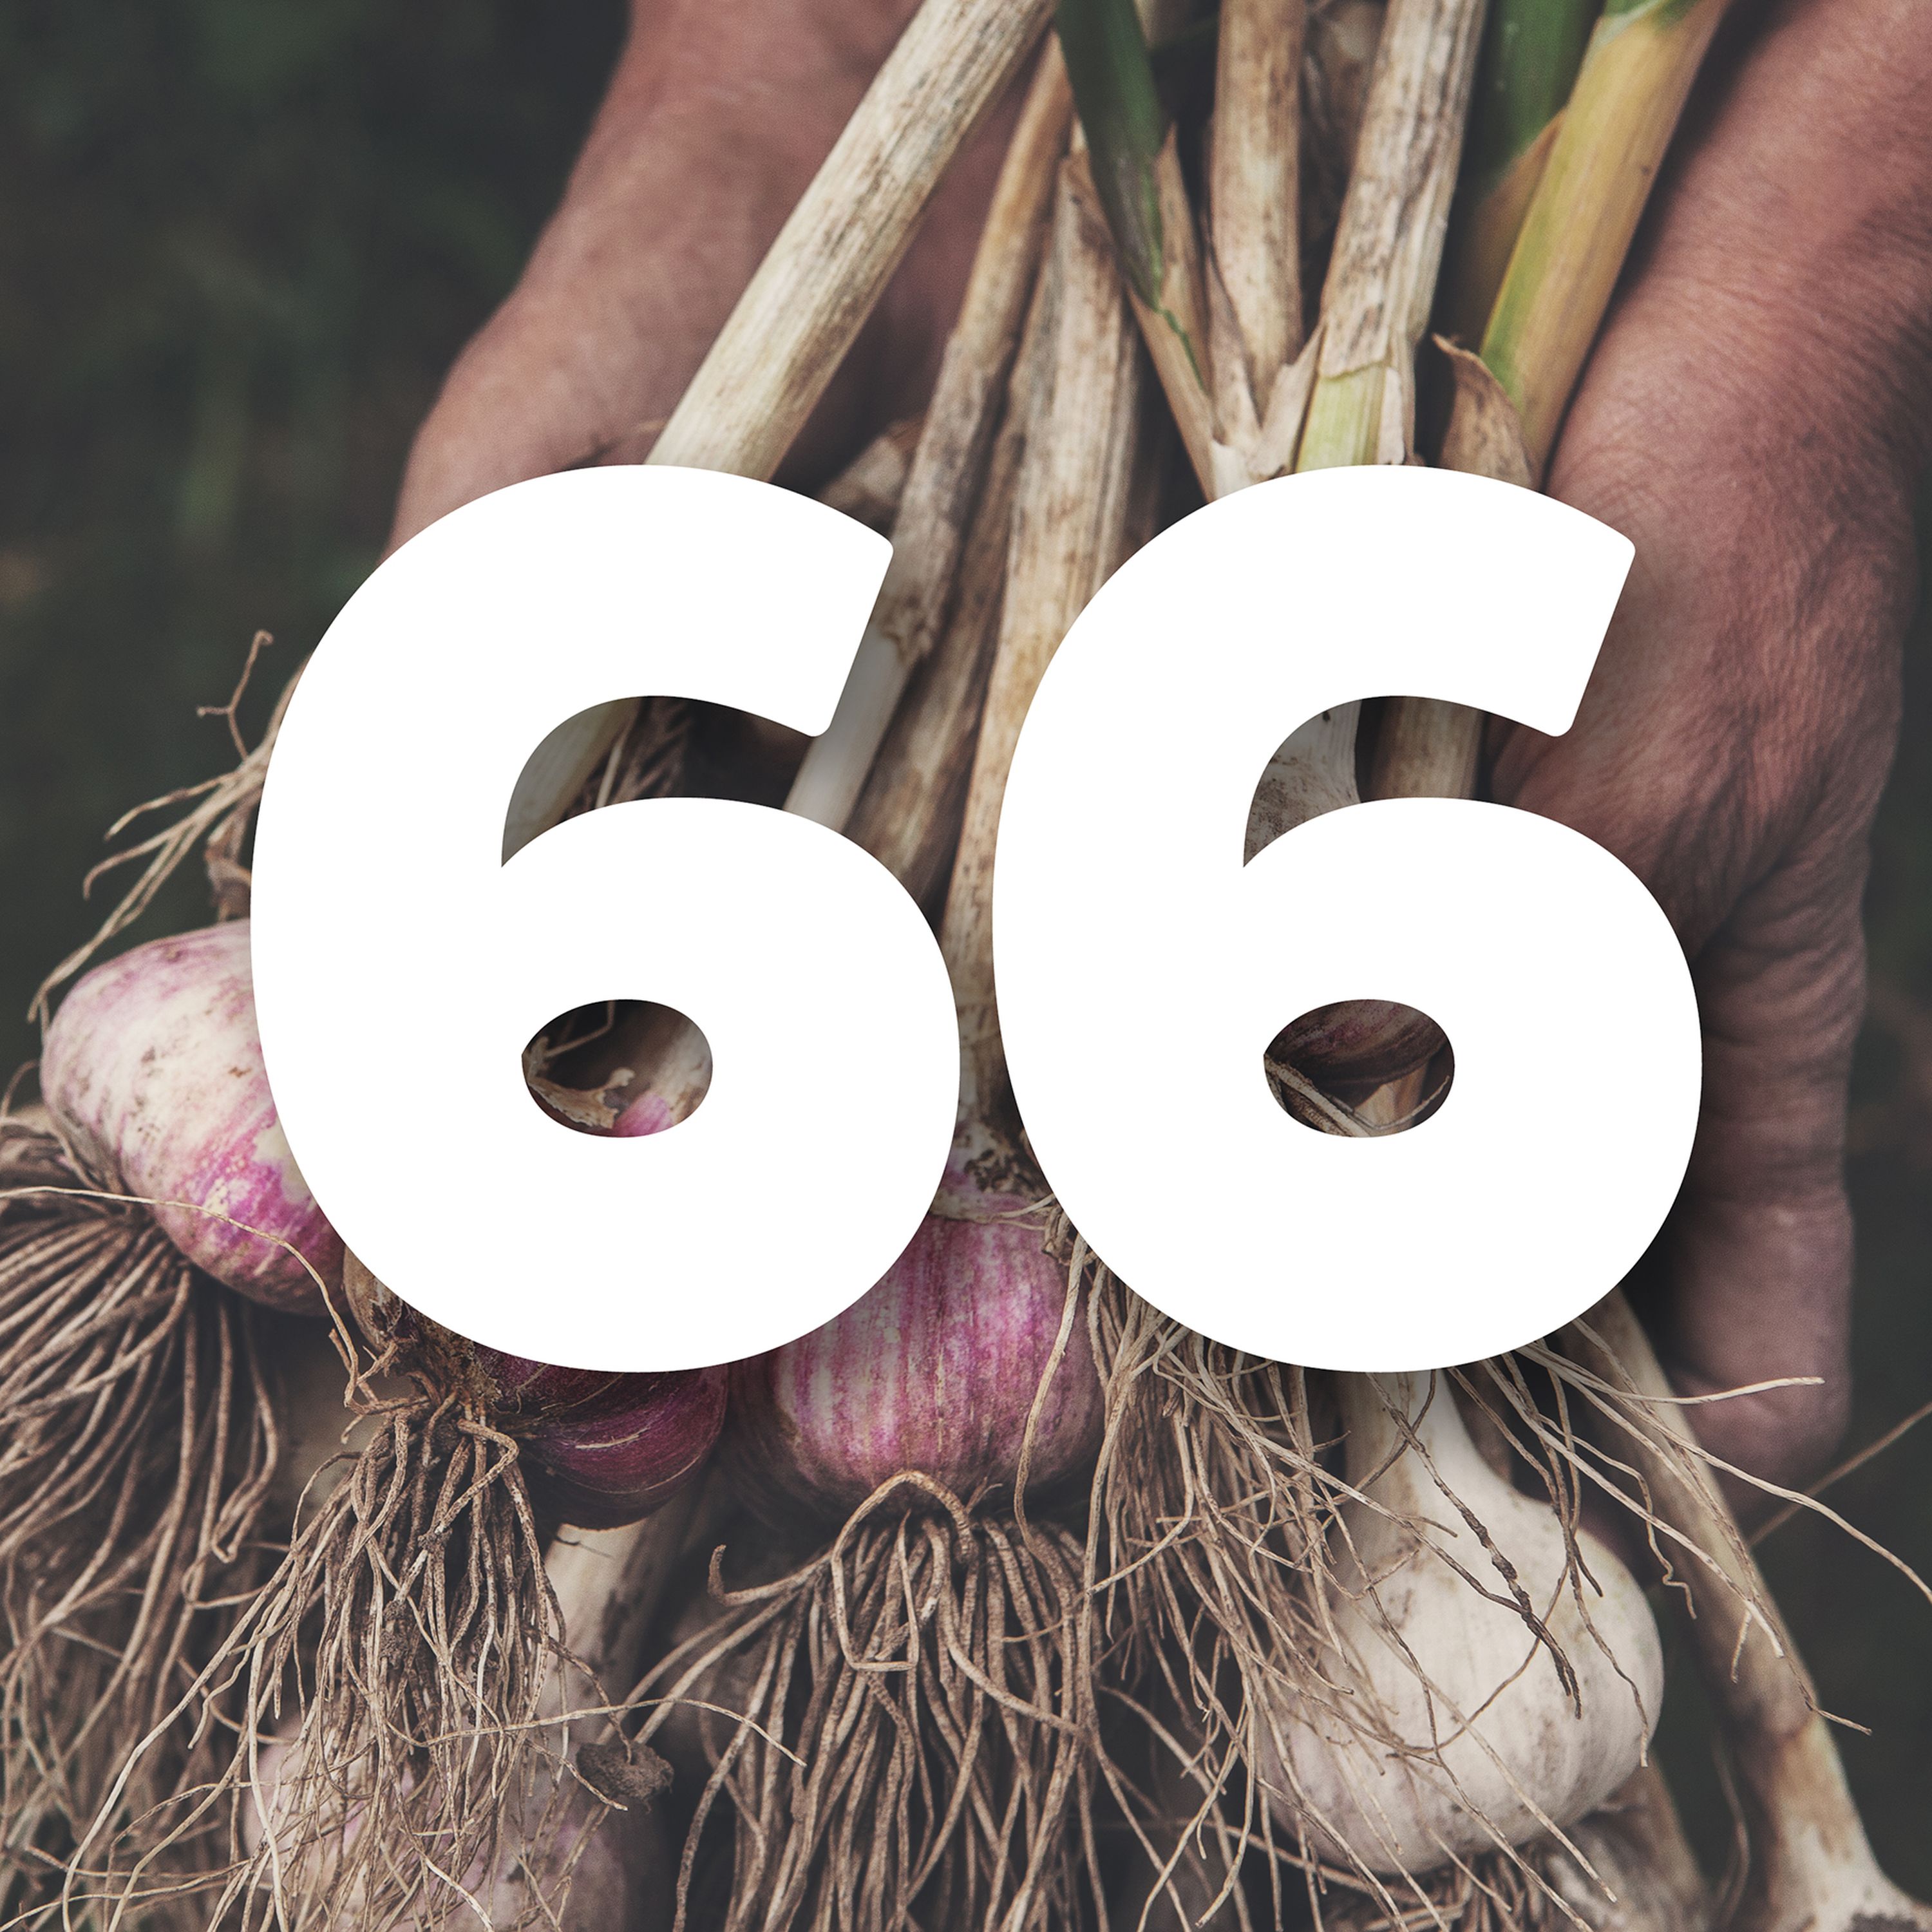 66 The Gift of Garlic